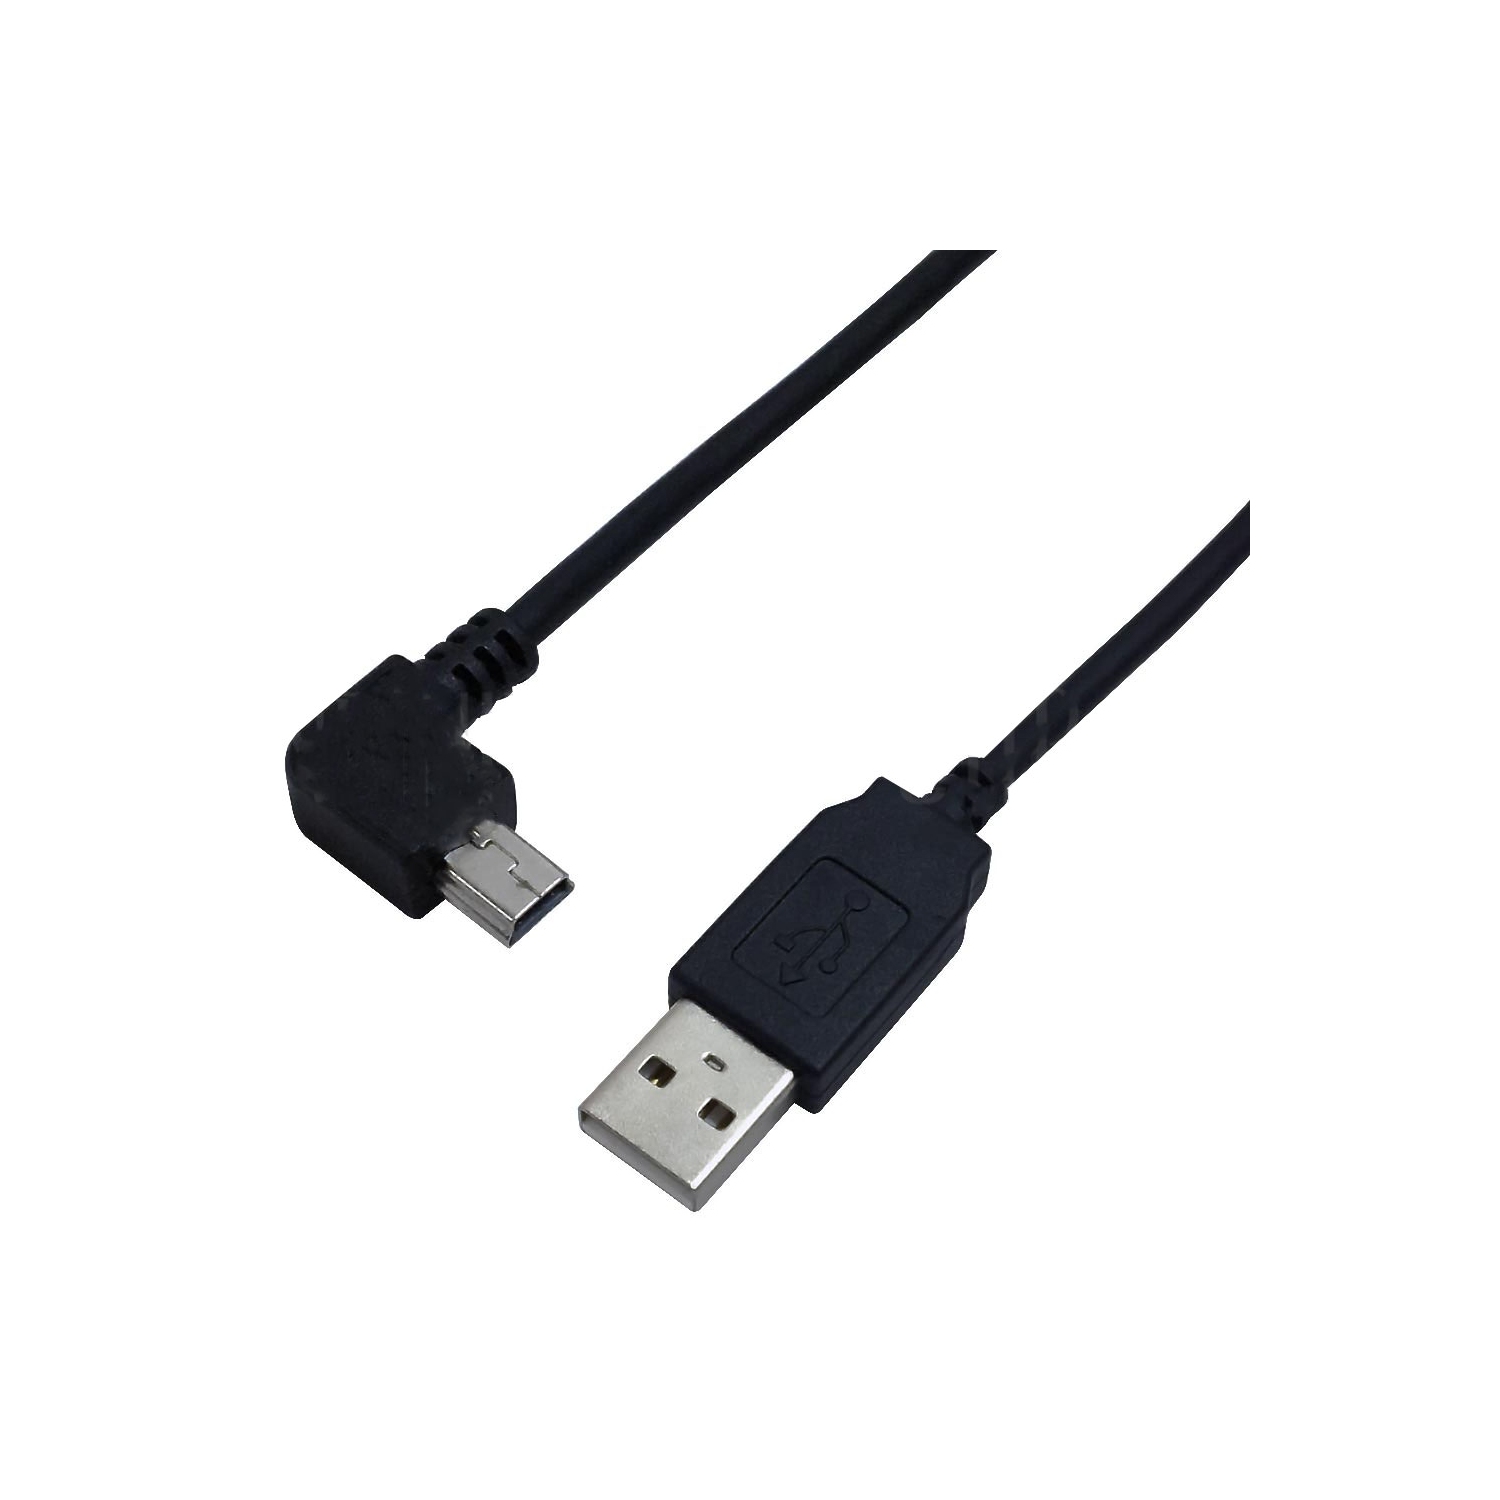 Free Shipping! HYFAI USB 2.0 A Straight Male to Mini-B 5-Pin Mini USB Right Angle Male Cable, 15 ft